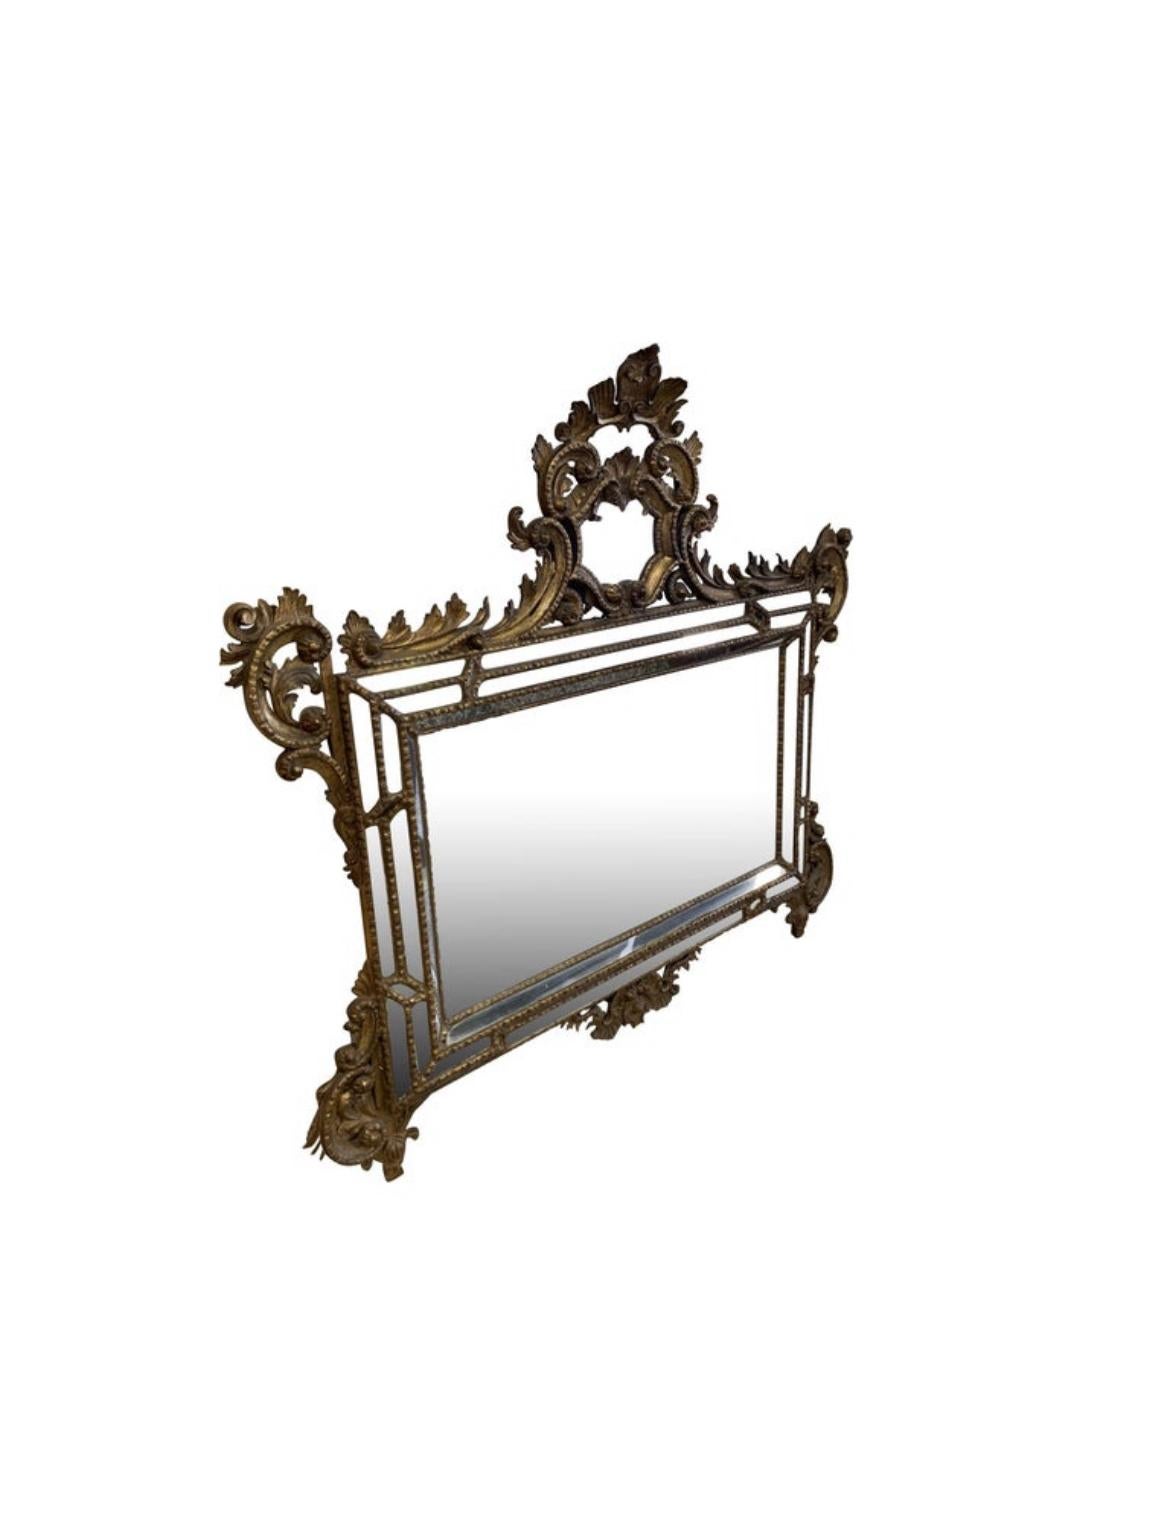 19th century mirrors